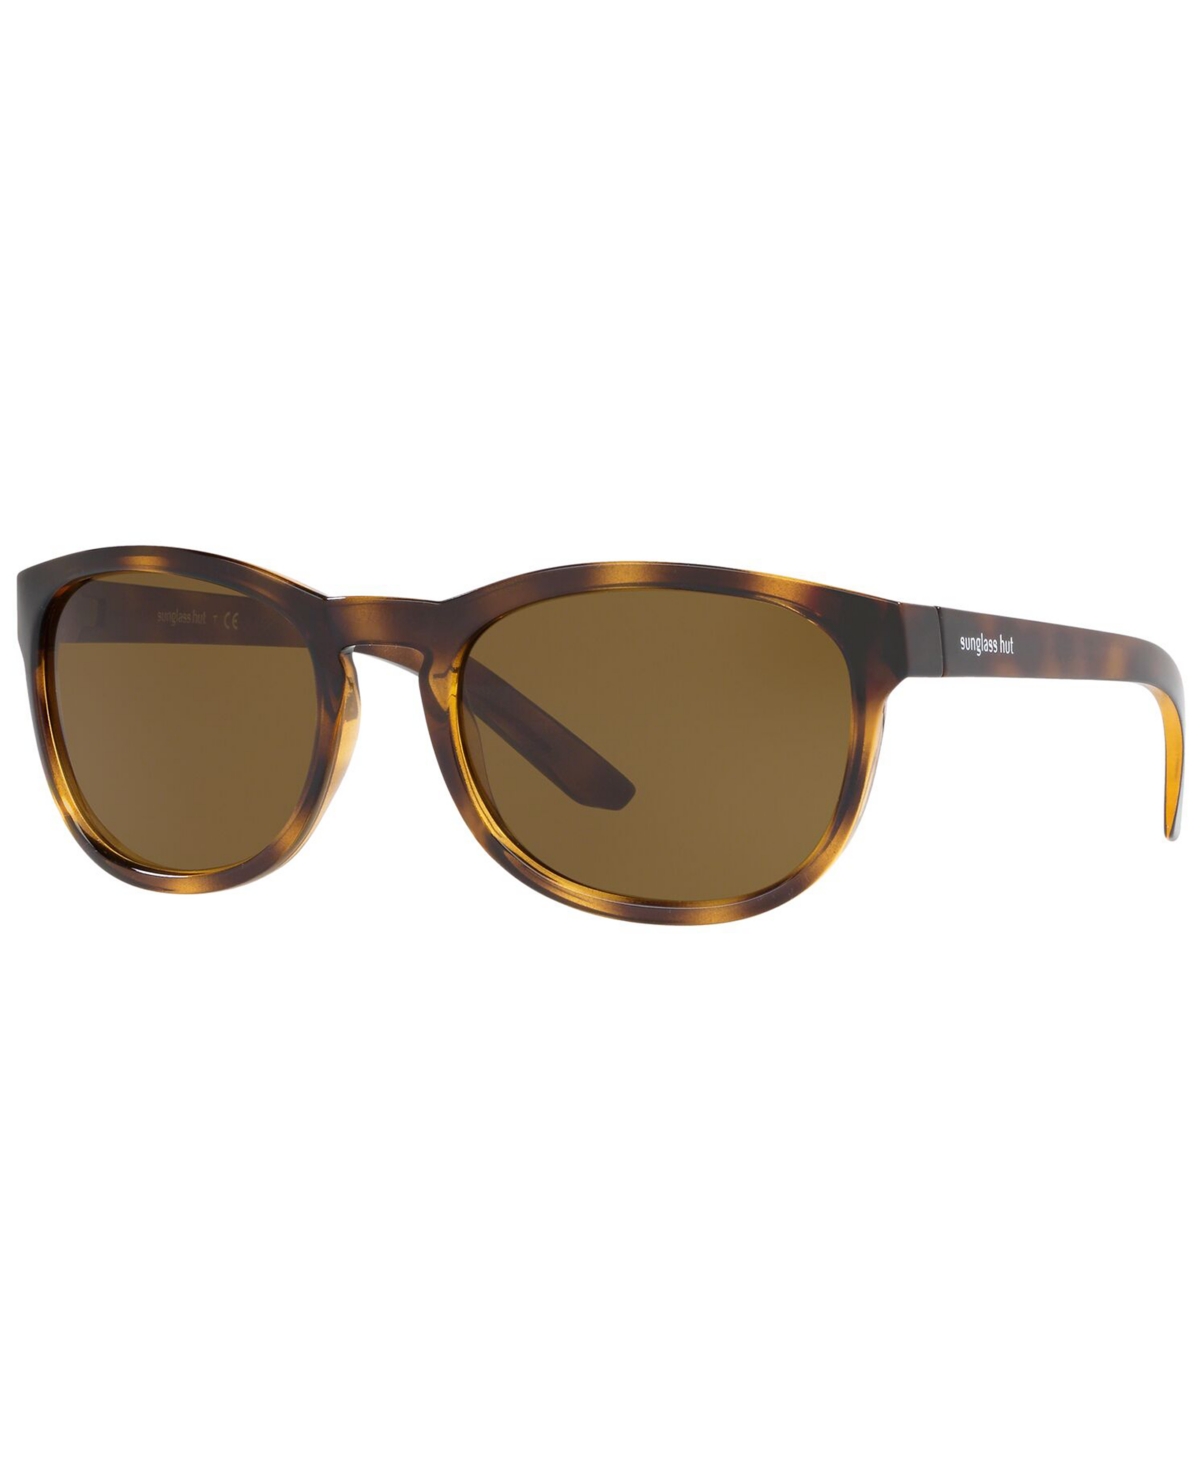 Men's Sunglasses, HU2015 57 - HAVANA/BROWN